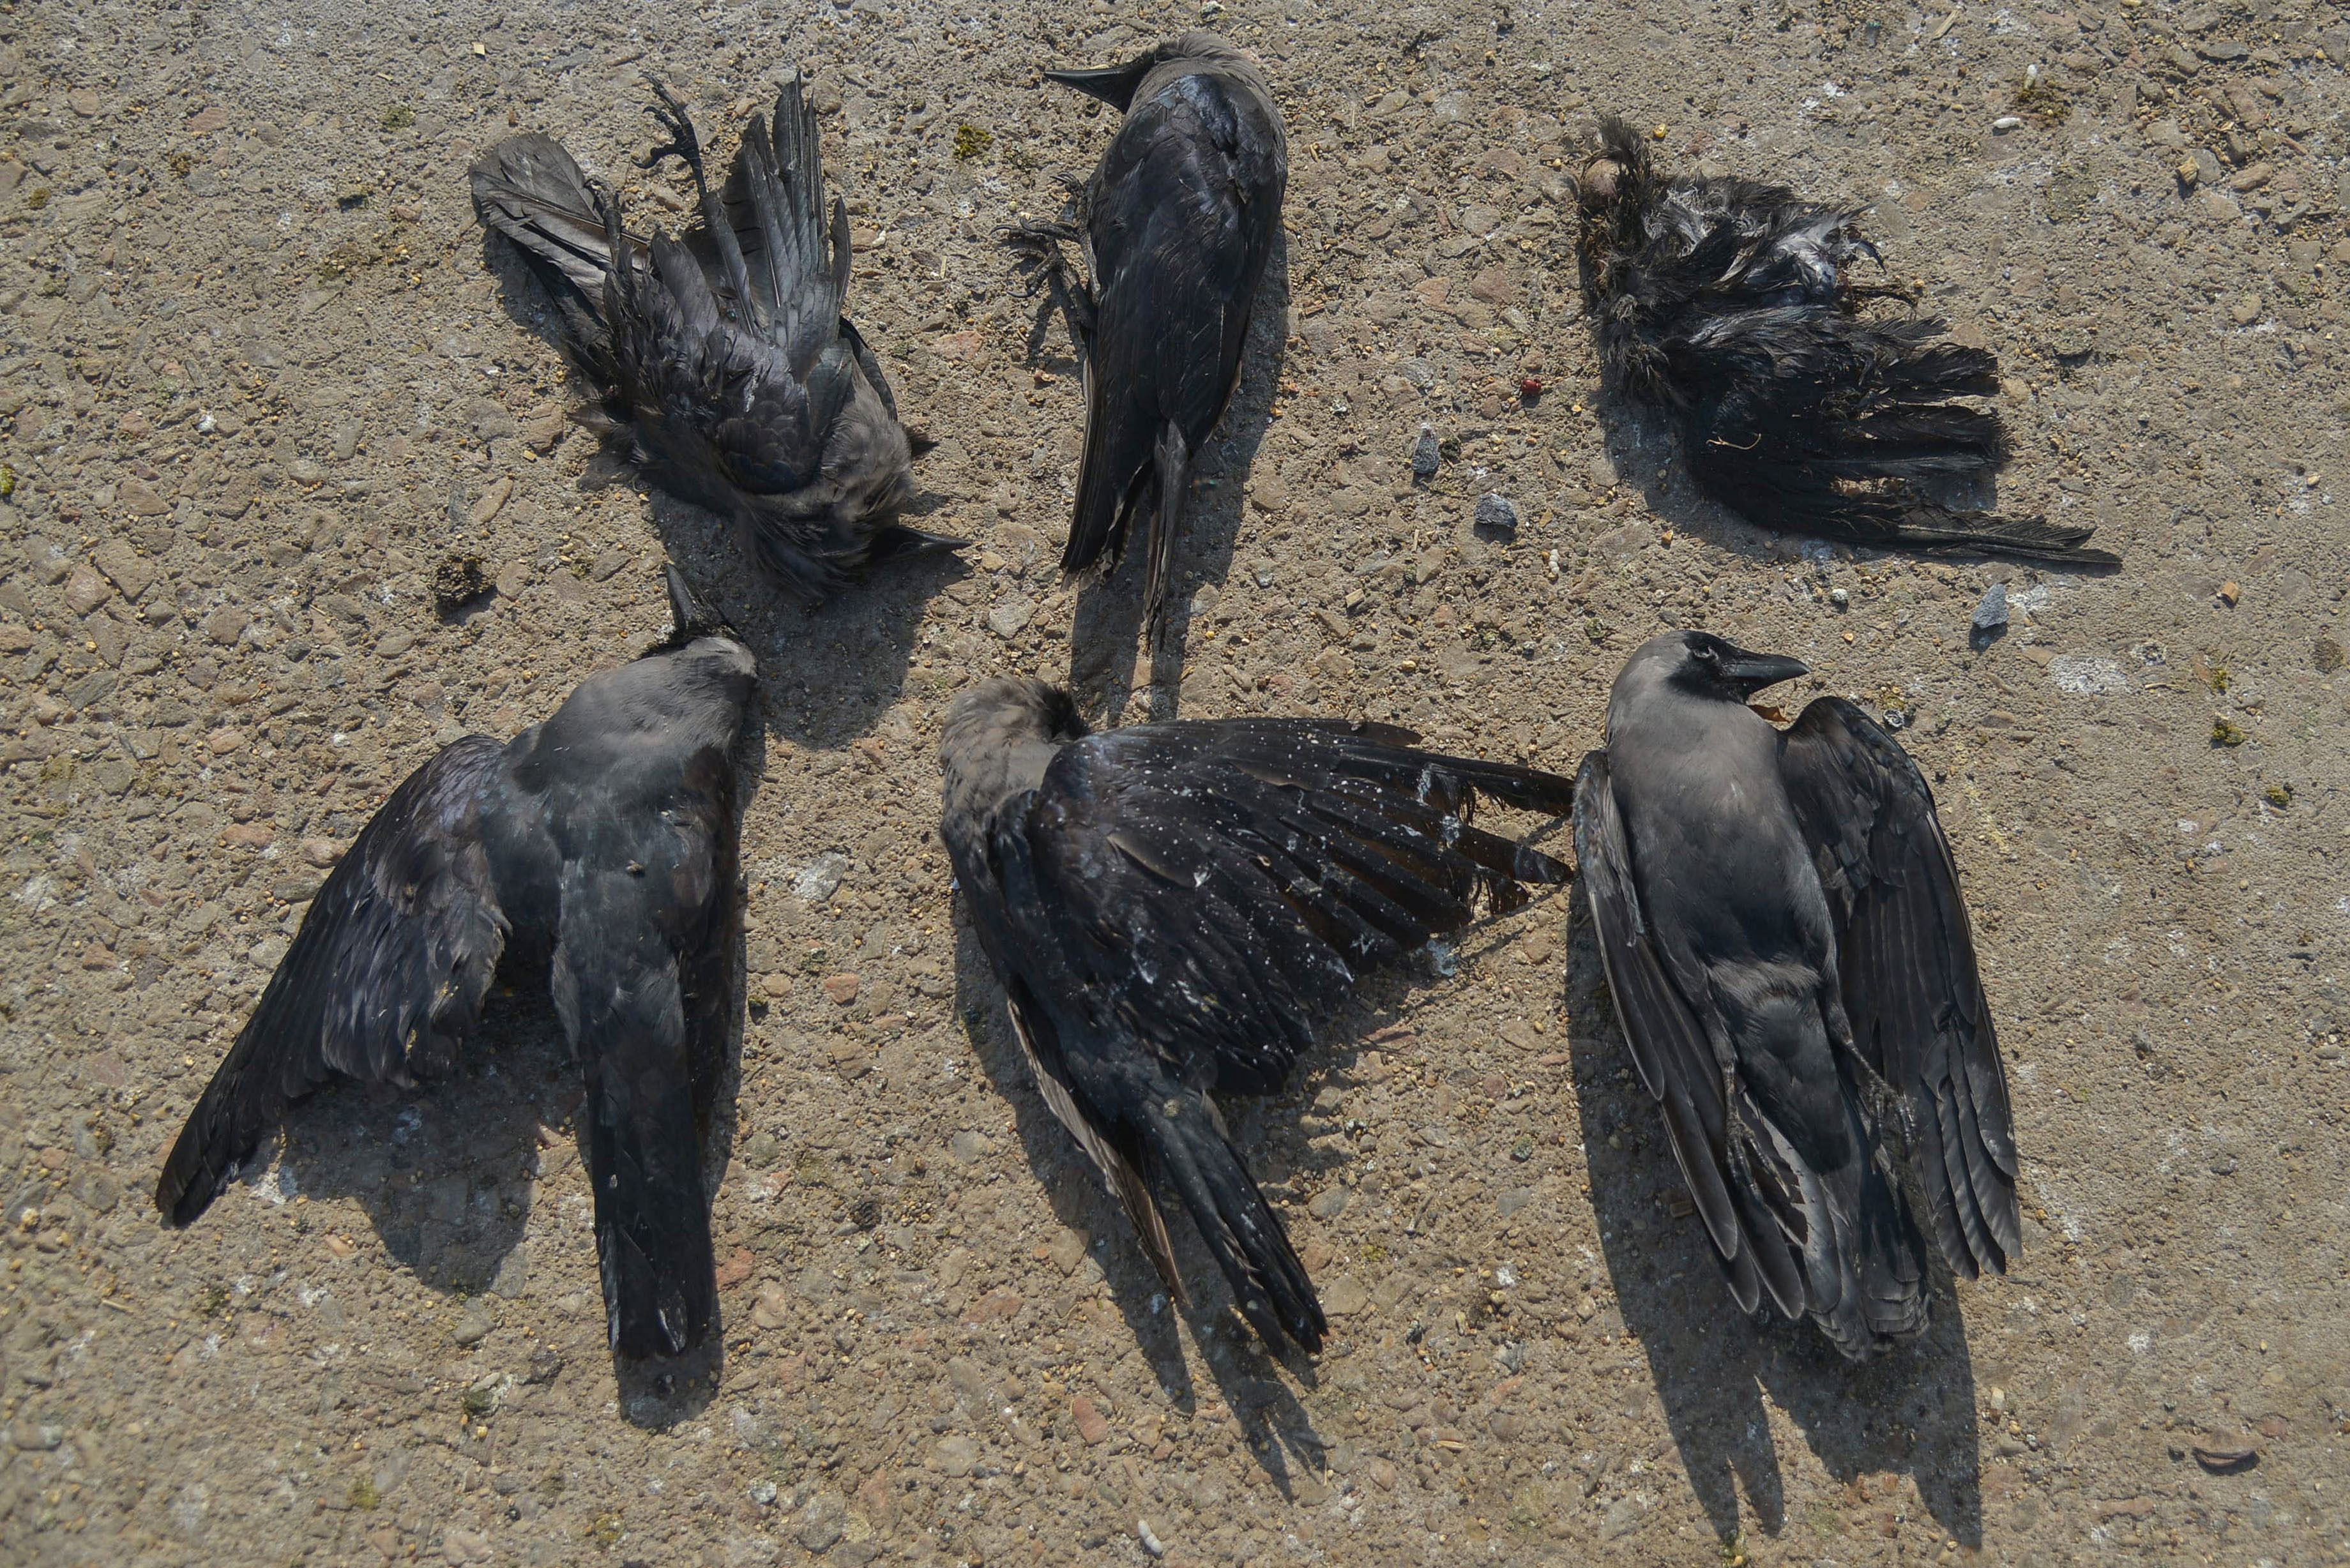 Птицы гибнут